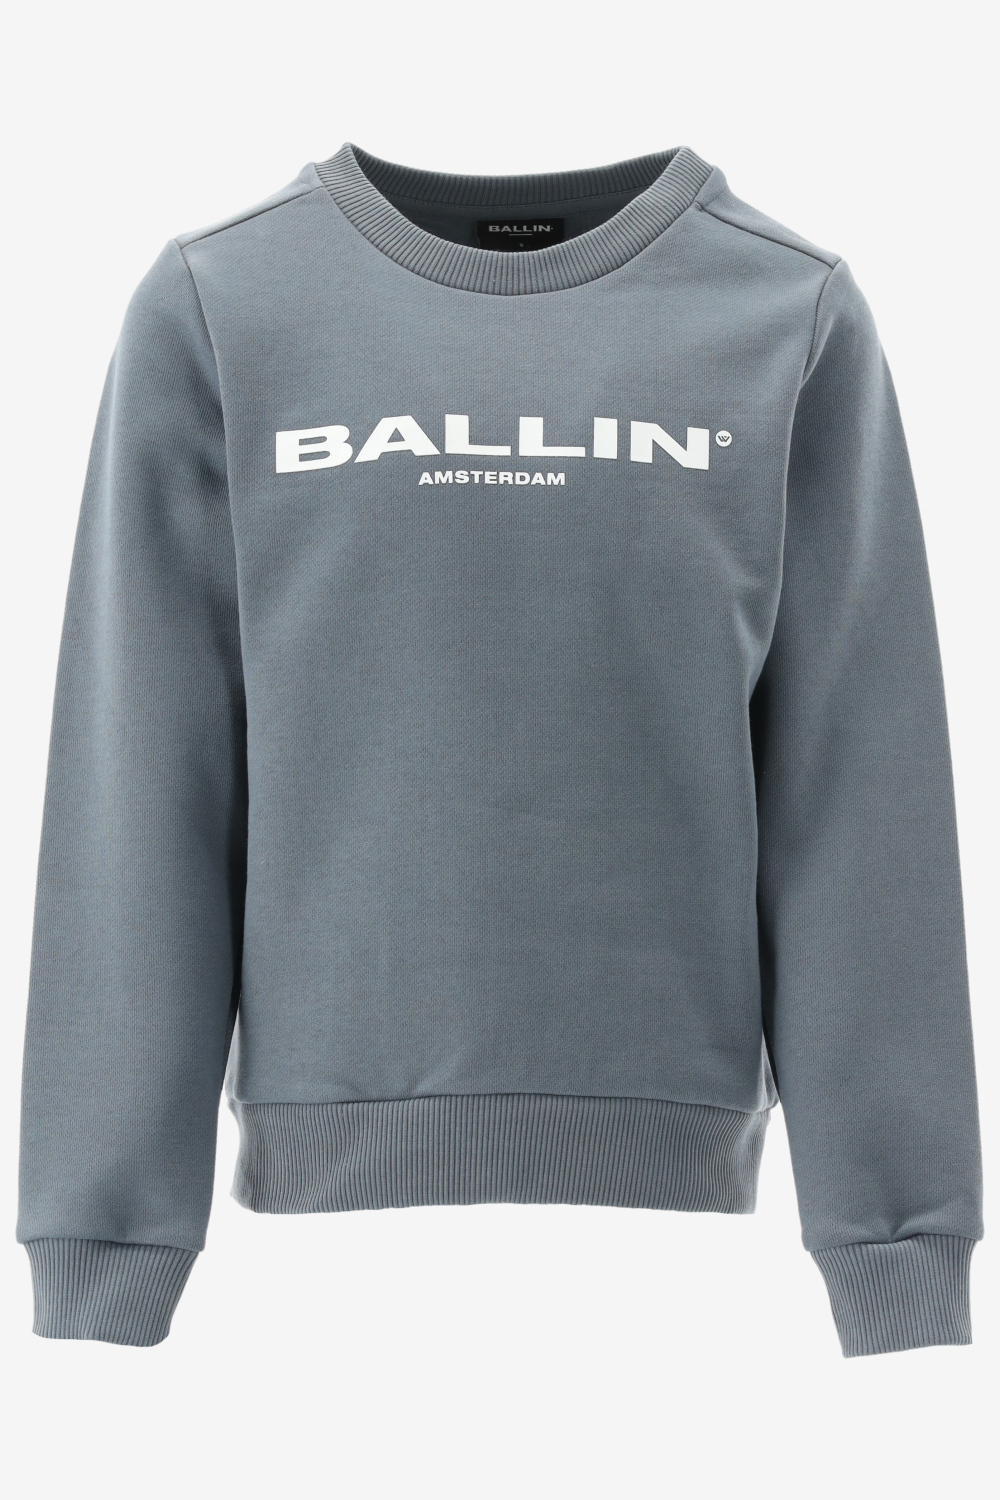 Ballin Amsterdam -  Jongens Slim Fit  Original Sweater  - Blauw - Maat 140